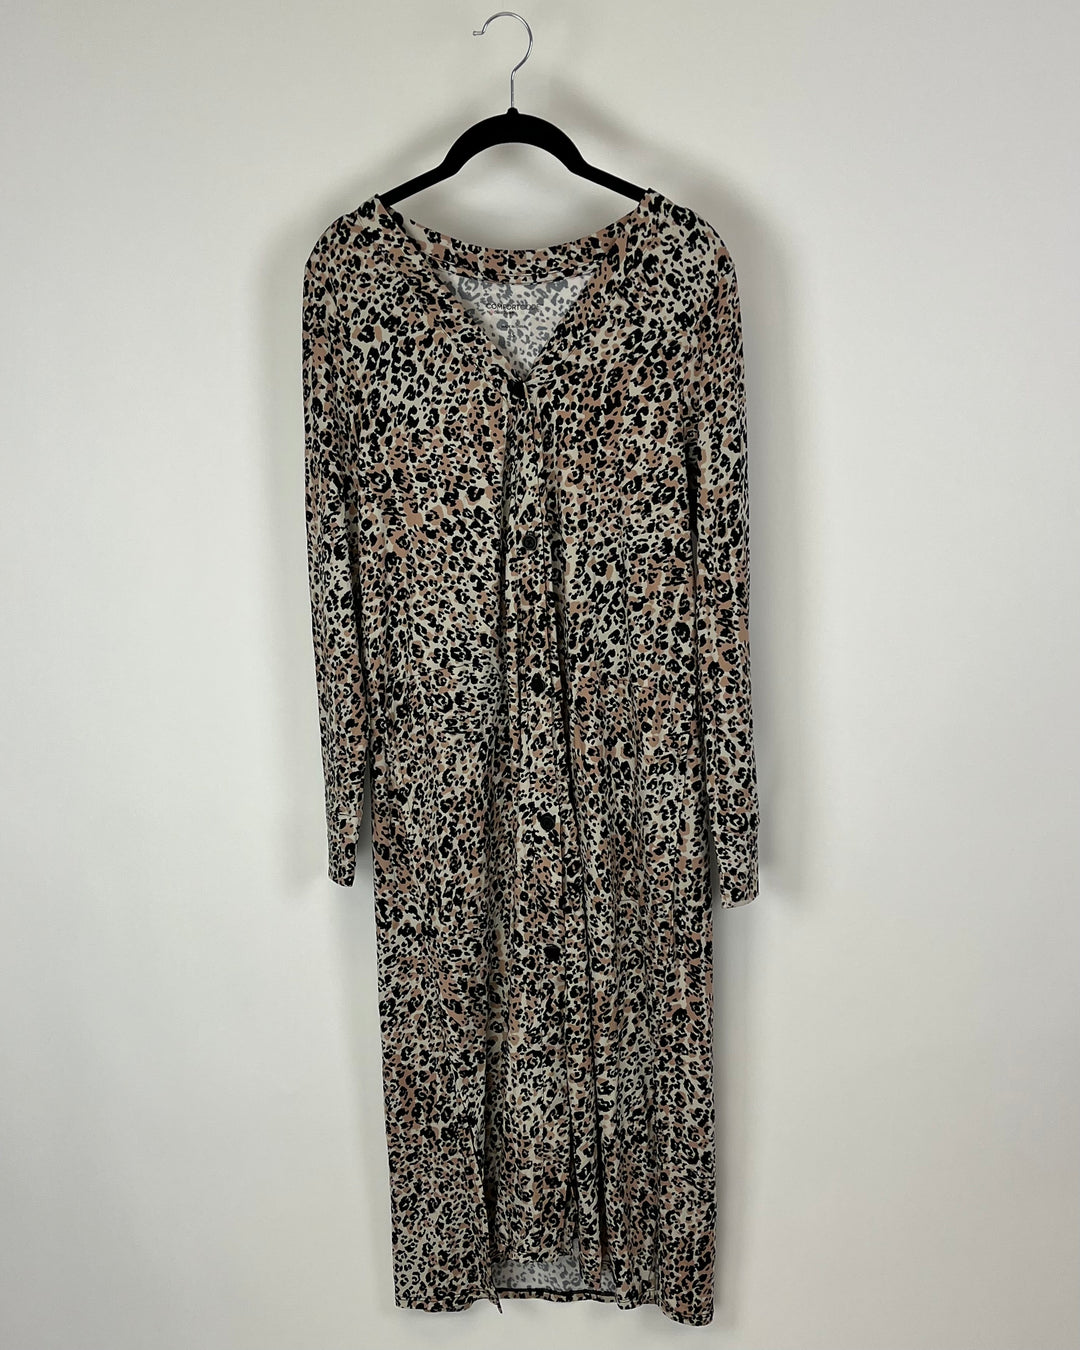 Cheetah Print Button Down Nightgown - Size 4-6